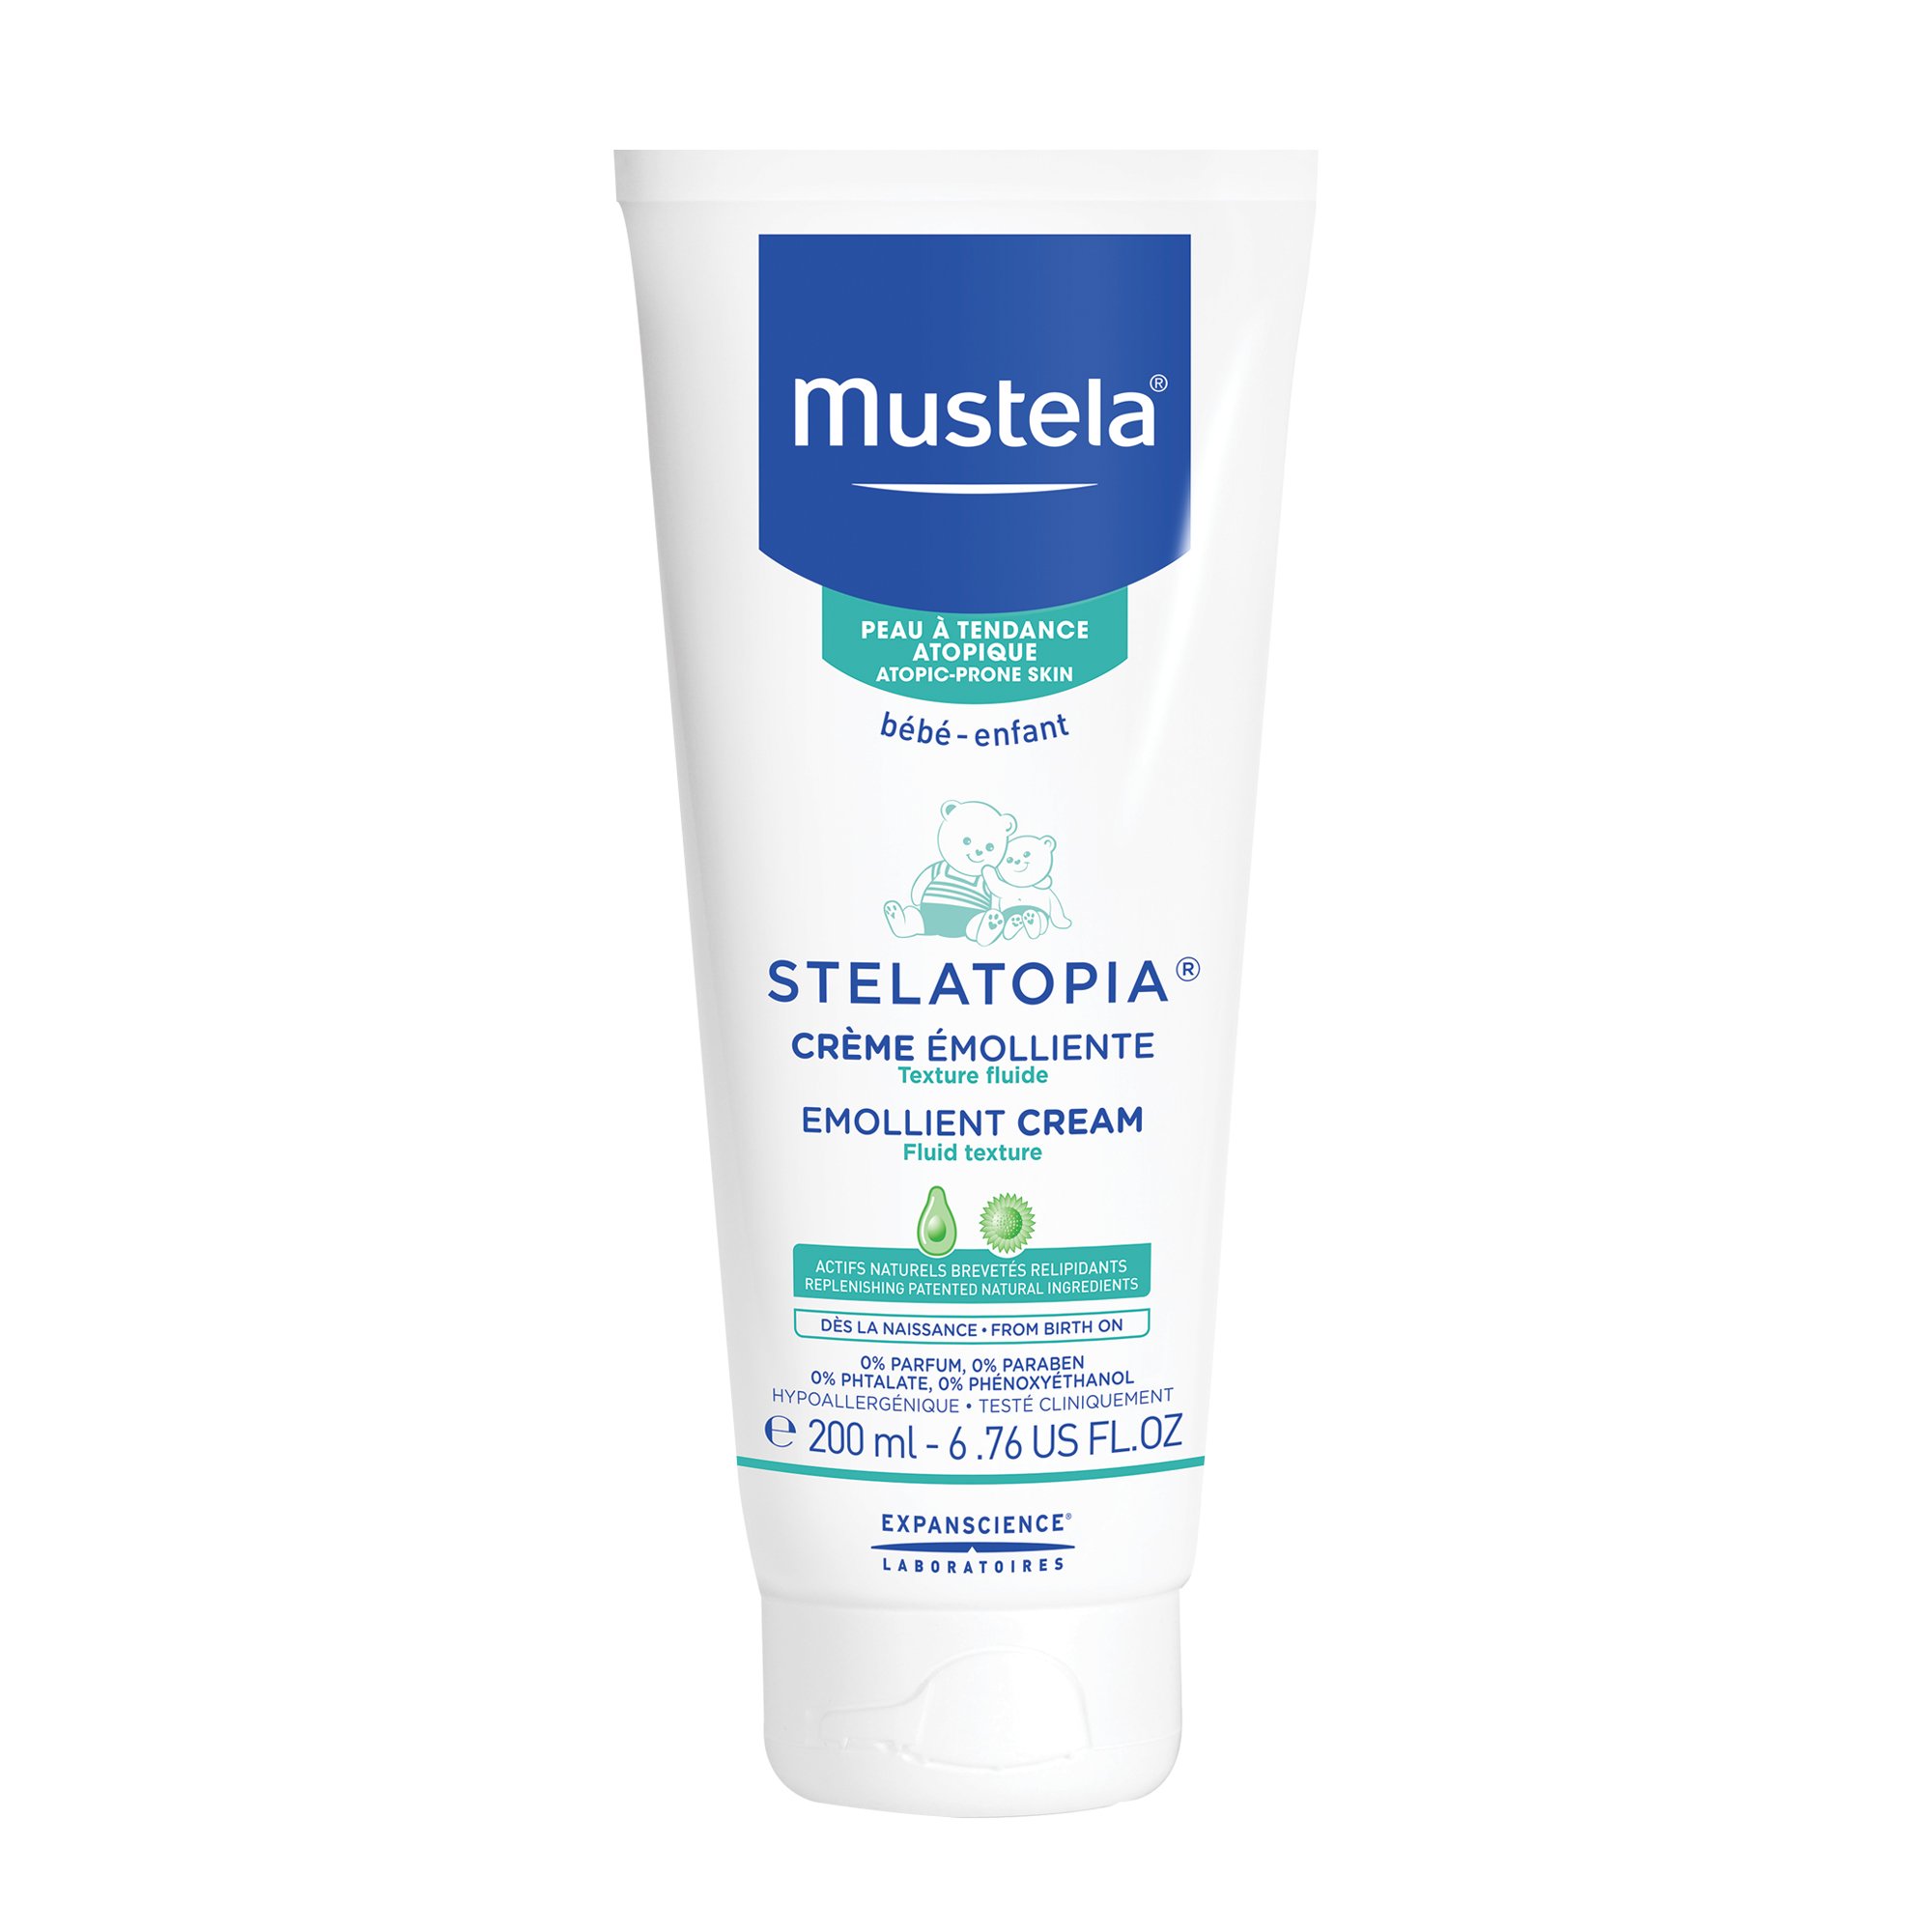 Mustela Stelatopia Baby Emollient Cream for Eczema